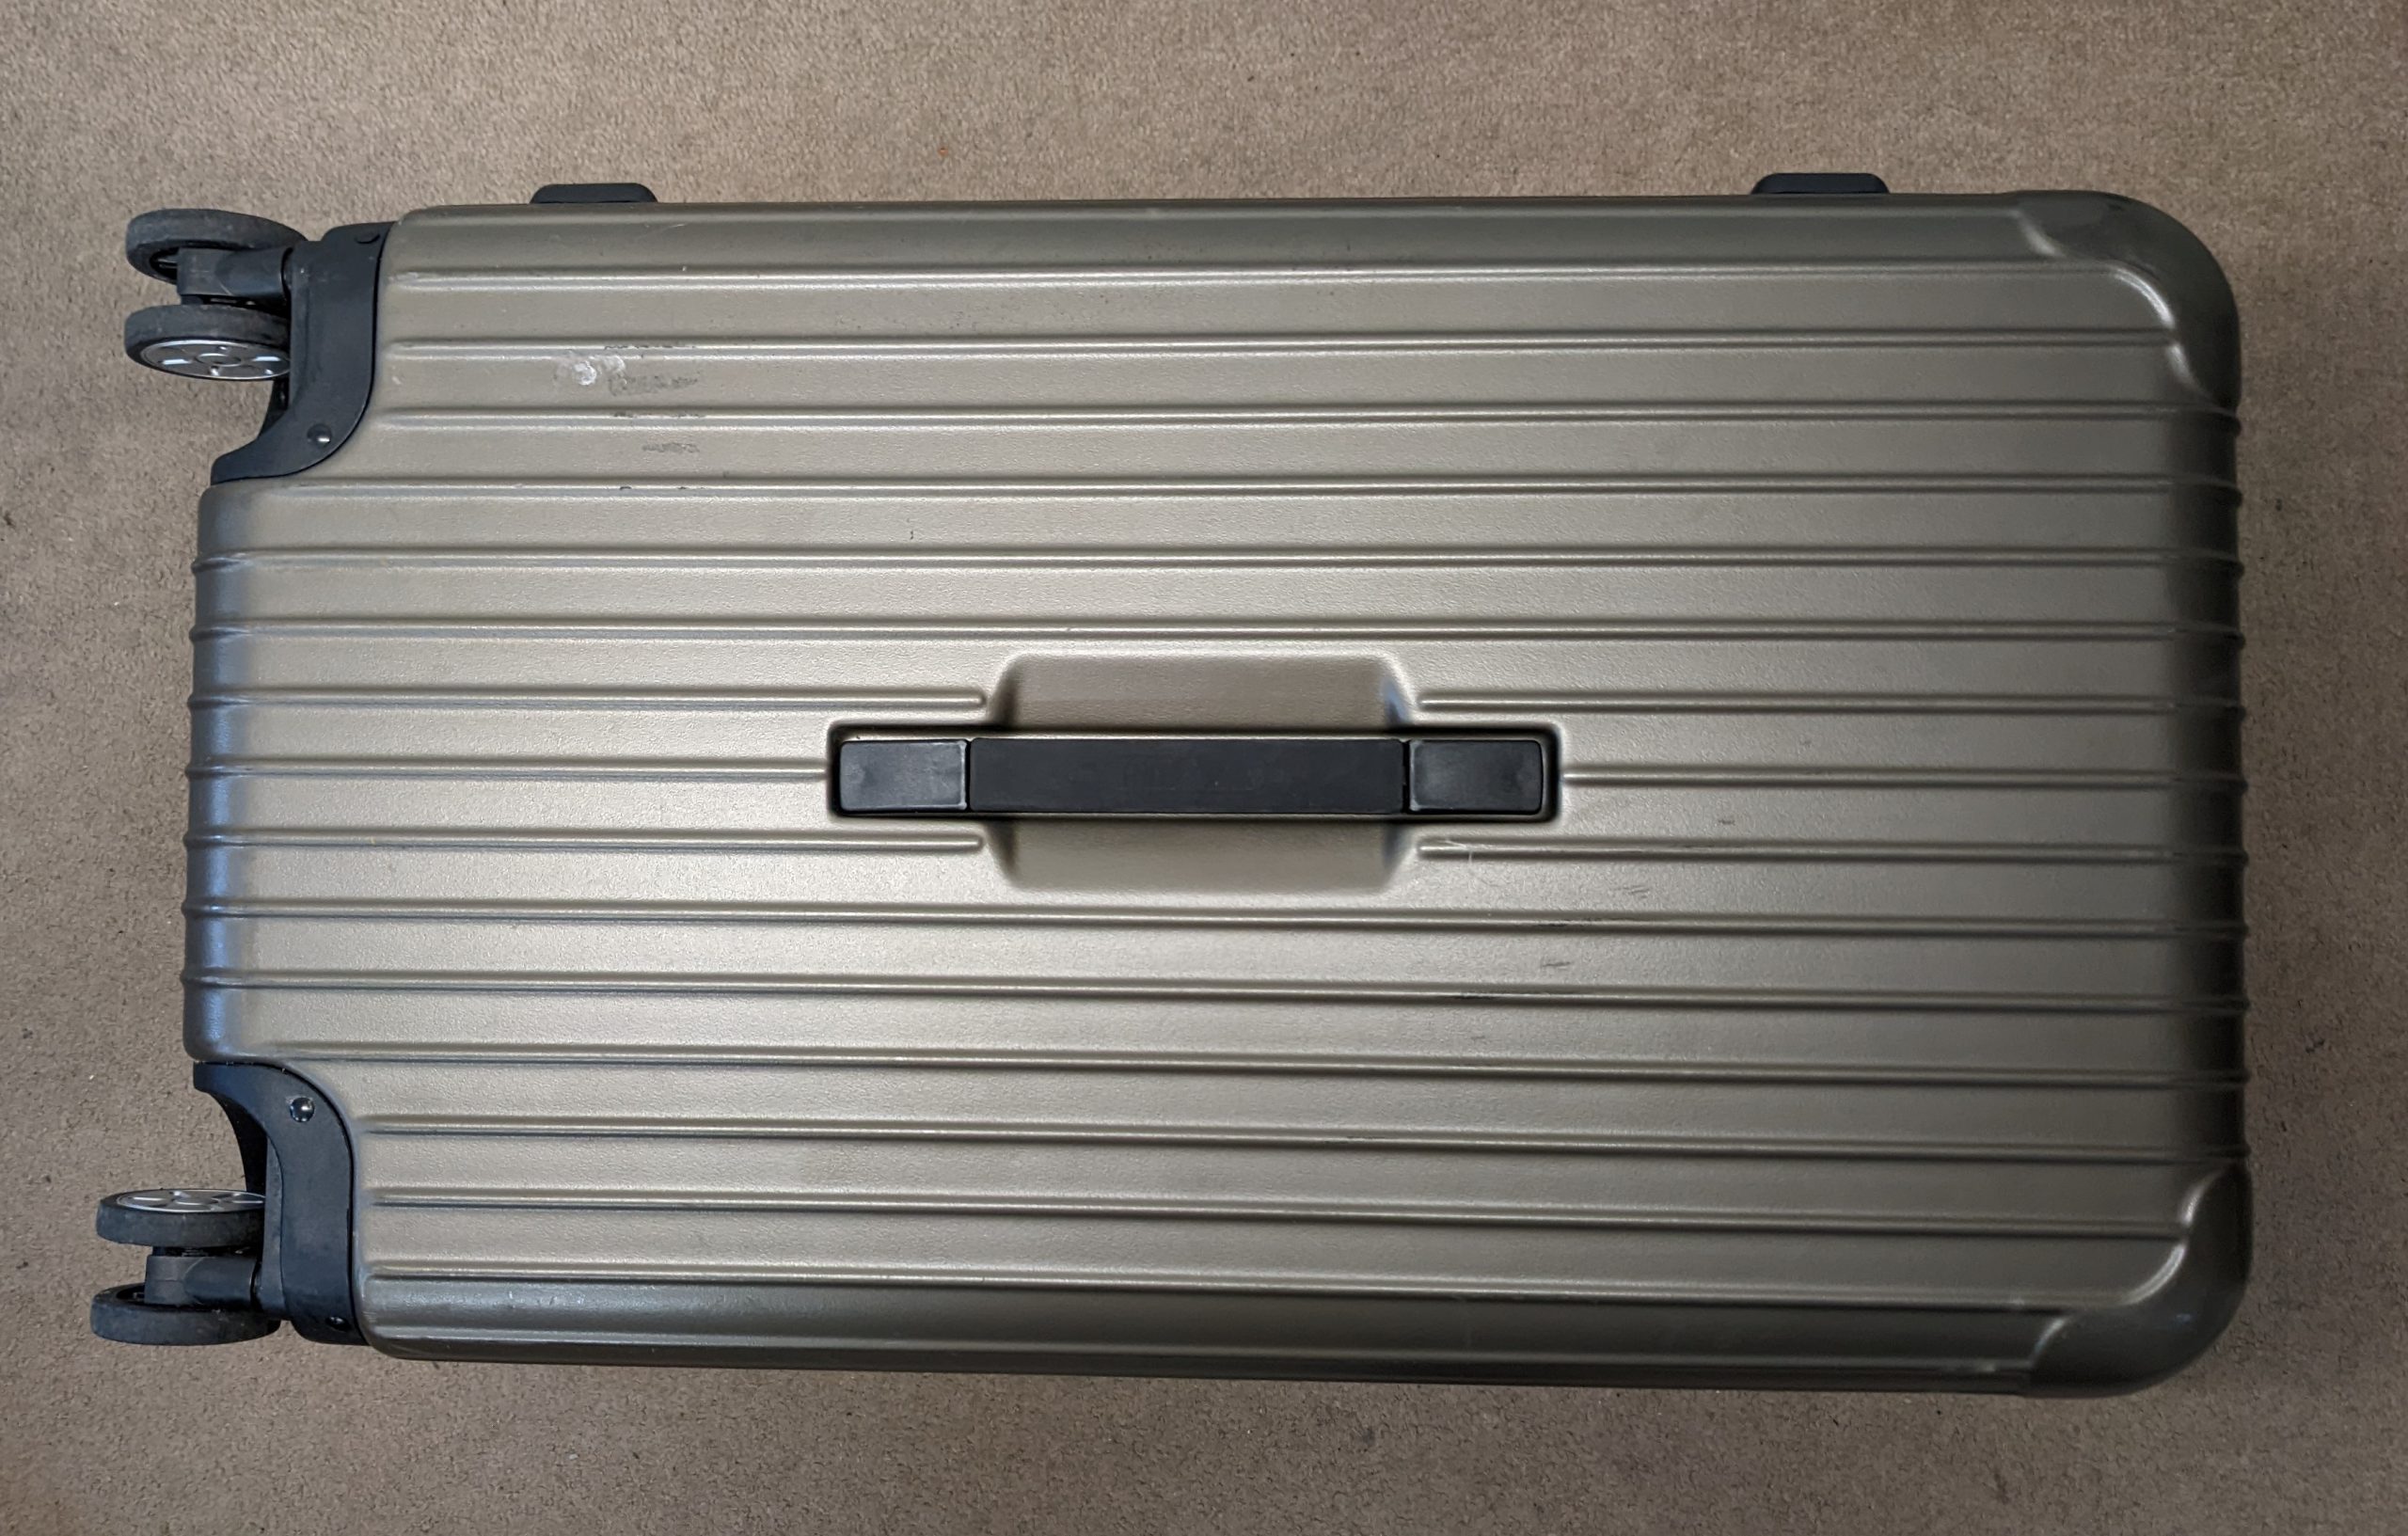 RIMOWA suitcase handle repair – The Shoe Carers